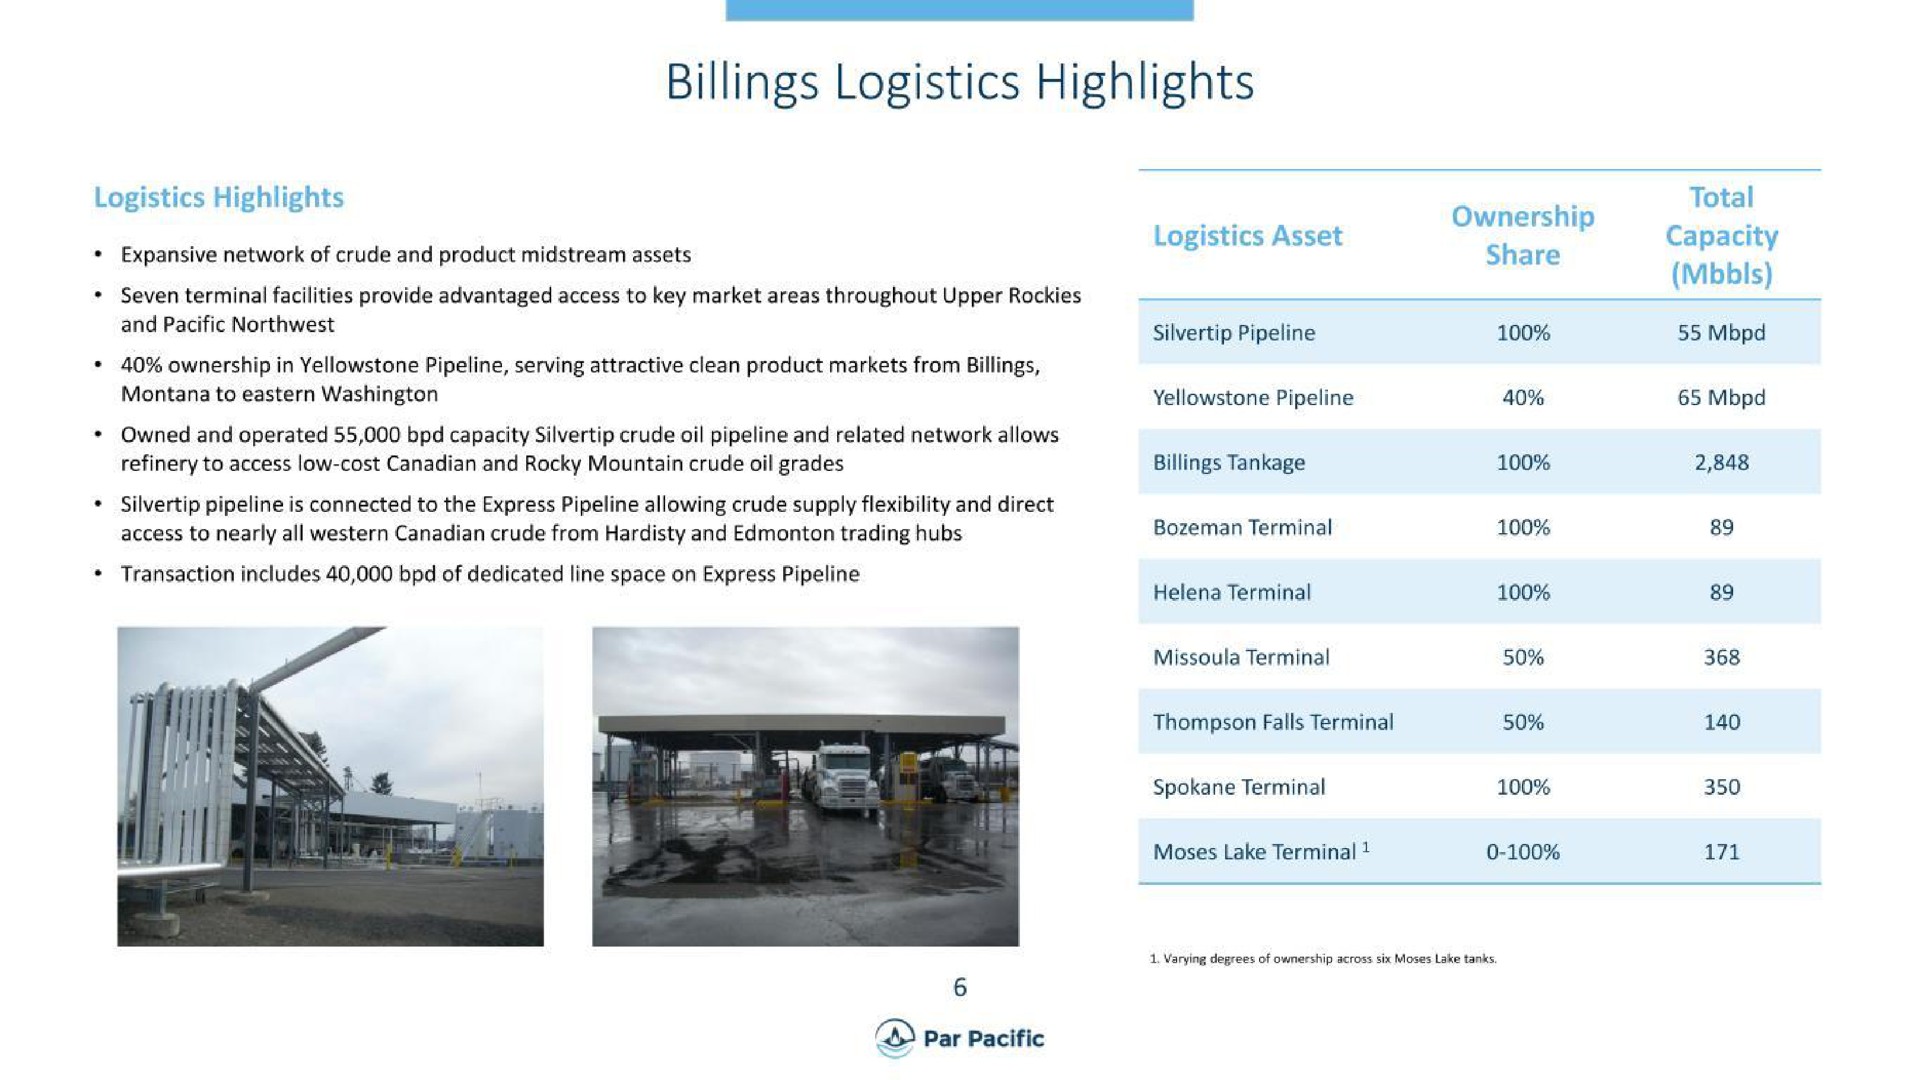 billings logistics highlights | Par Pacific